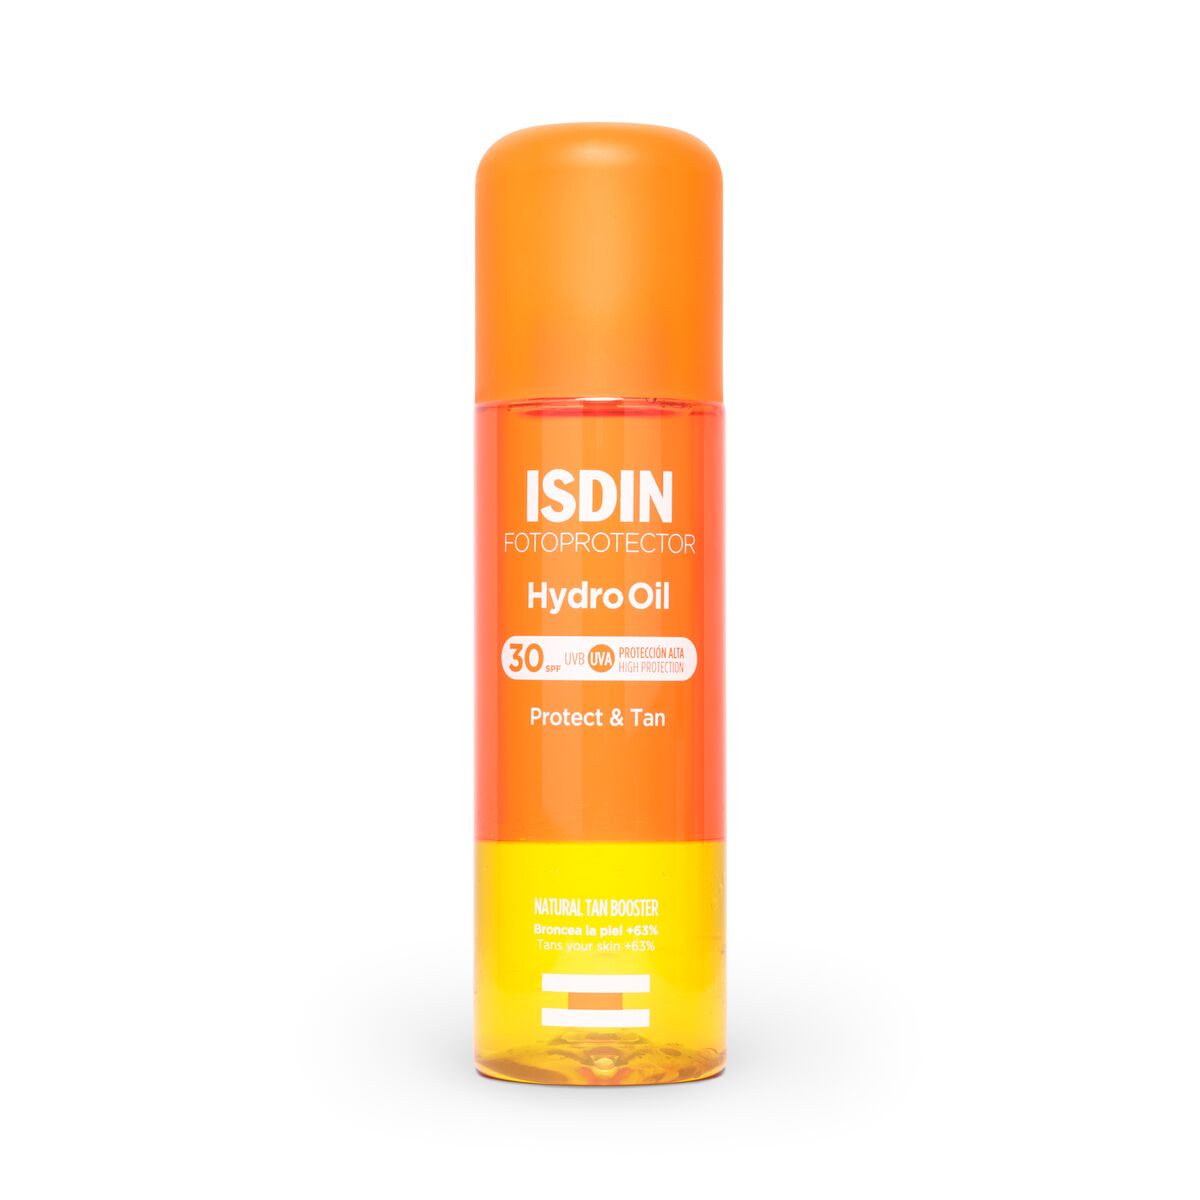 Hydro Oil SPF 30 Fotoprotector Isdin - spray de 200 ml